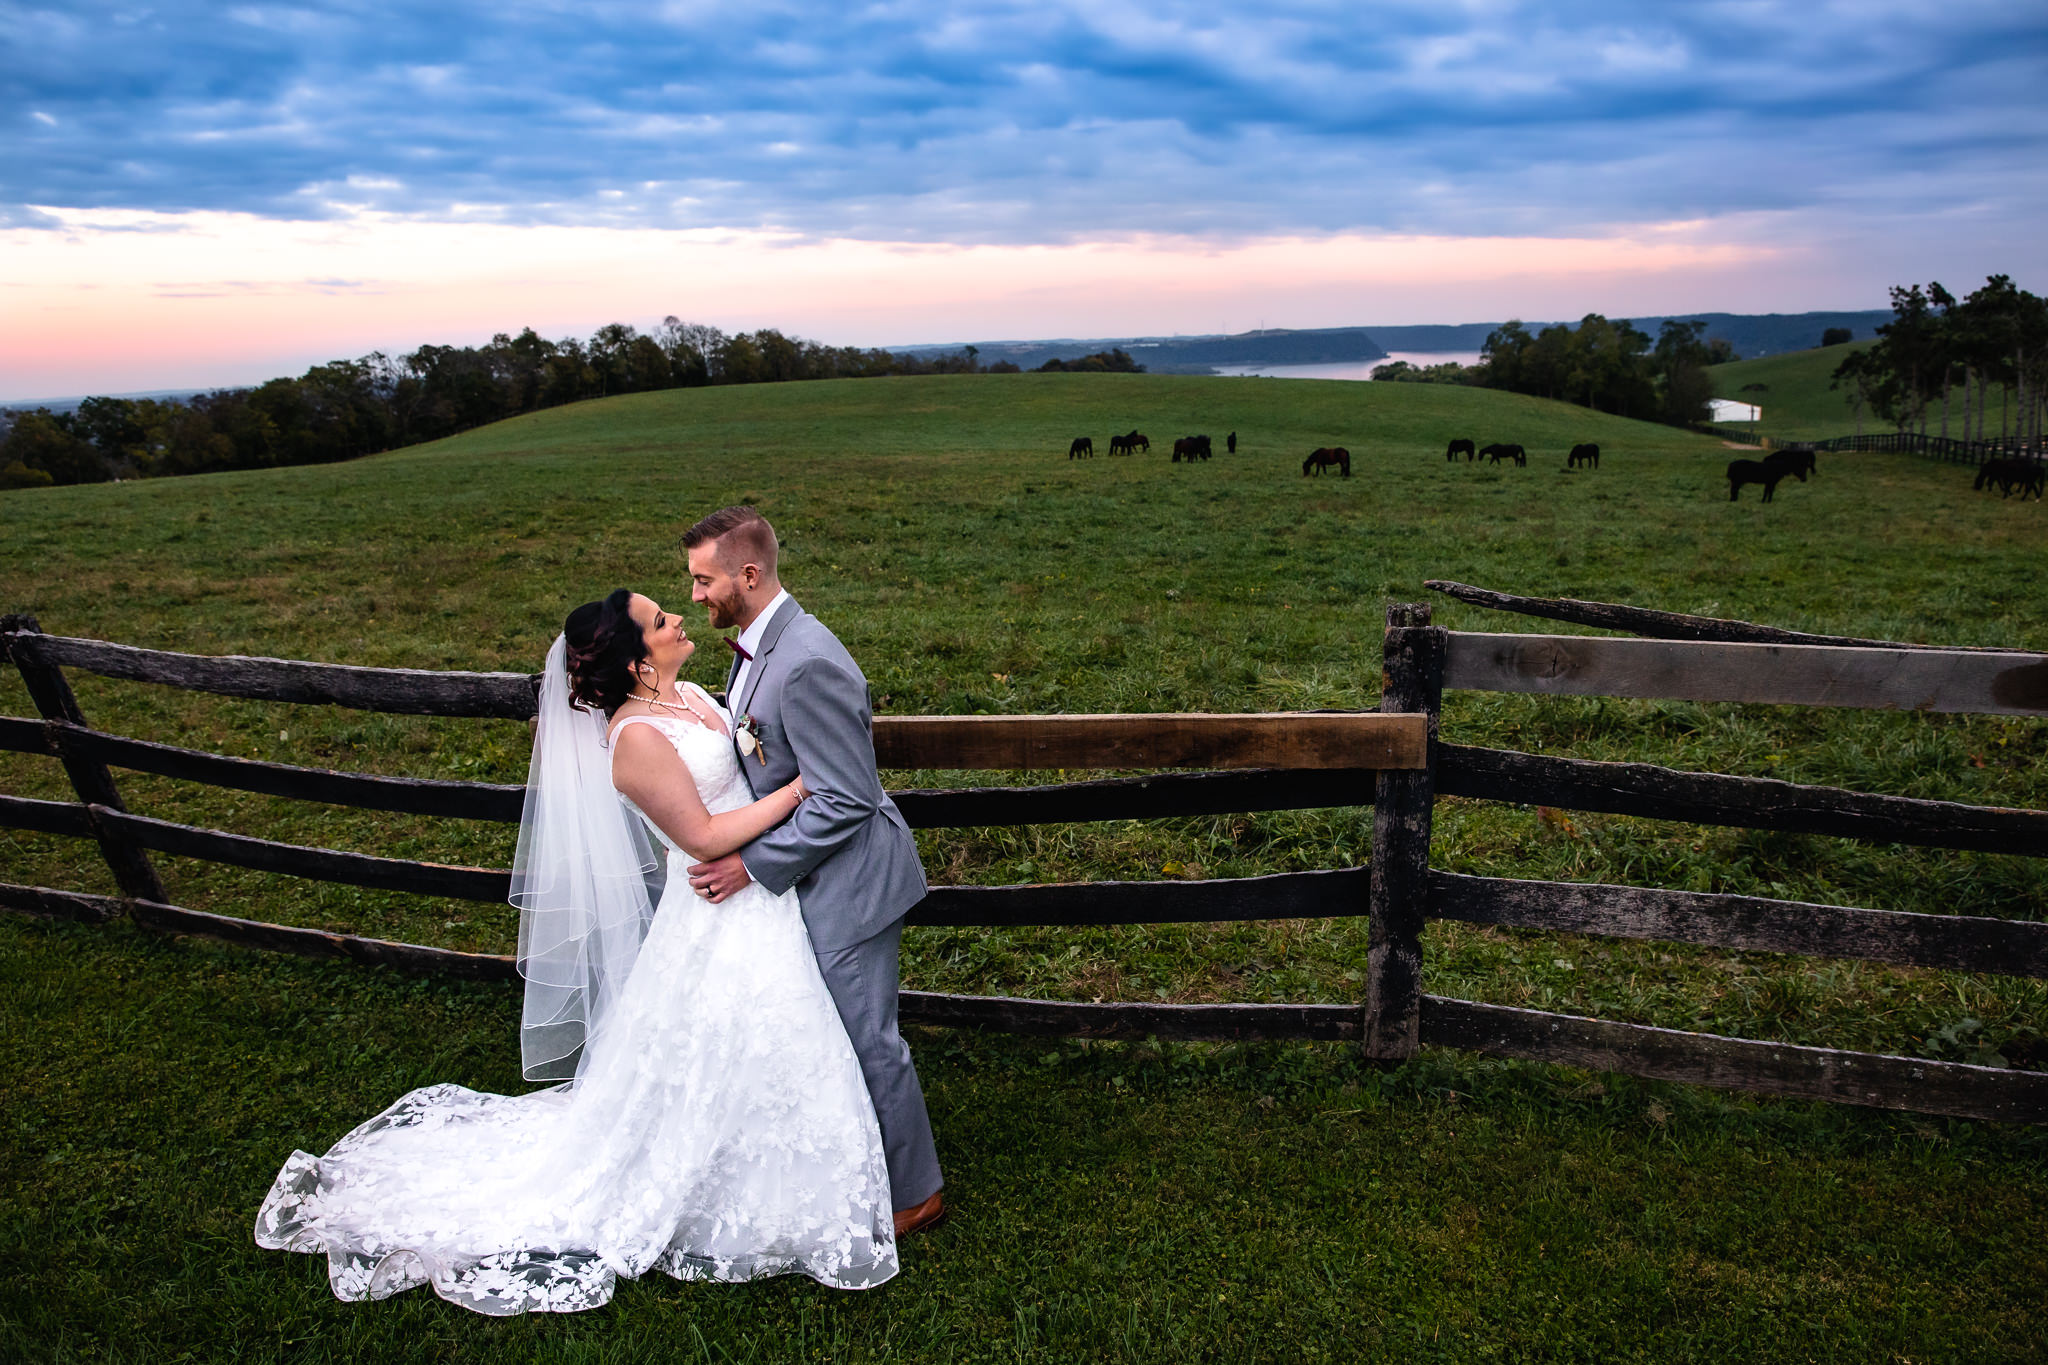 Lauxmont Farms Wedding: Heather & Iain